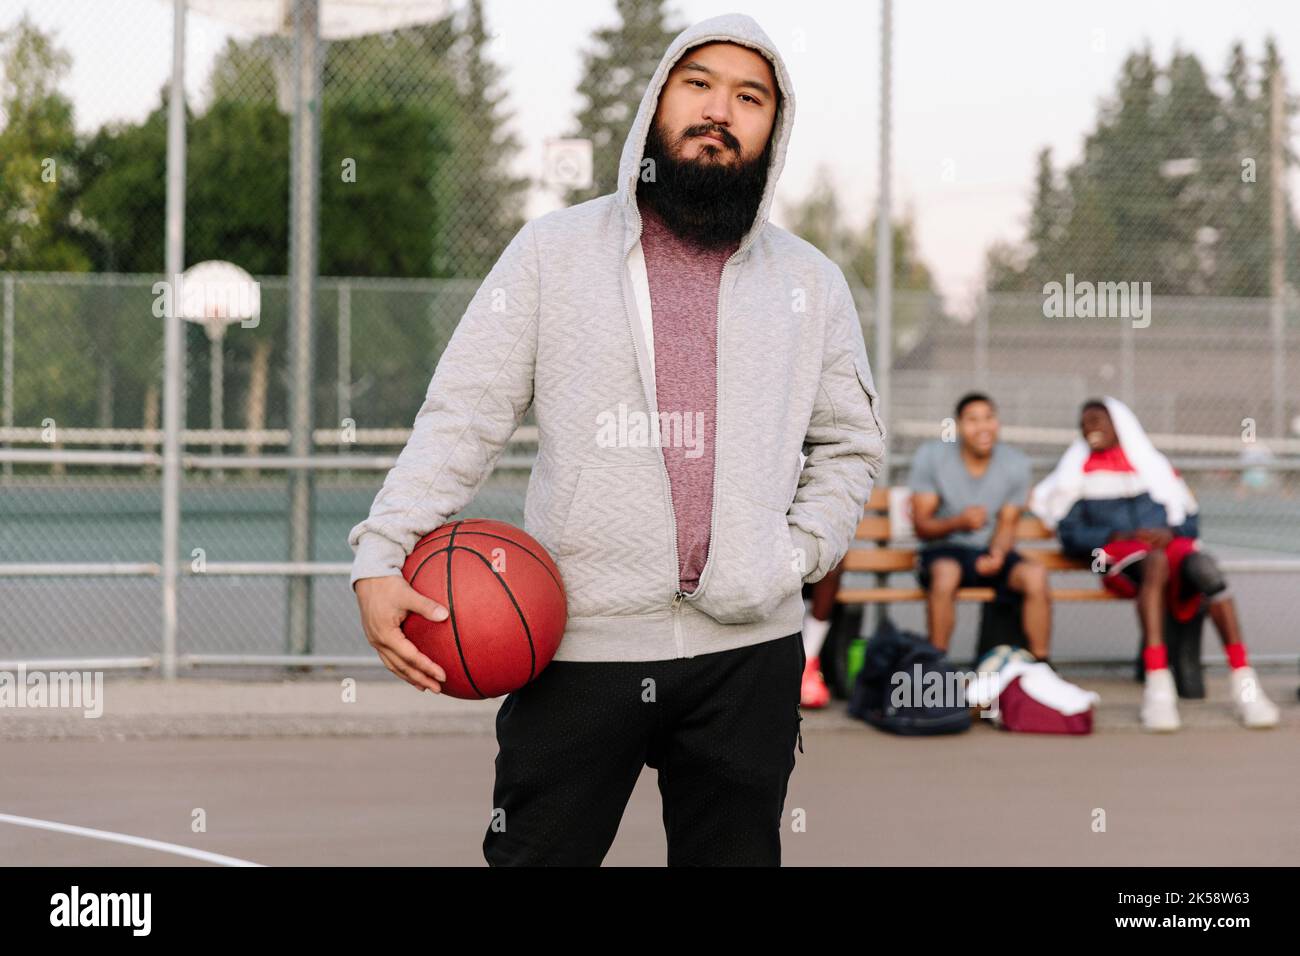 Basketball player holding ball and facing camera Stock Photo